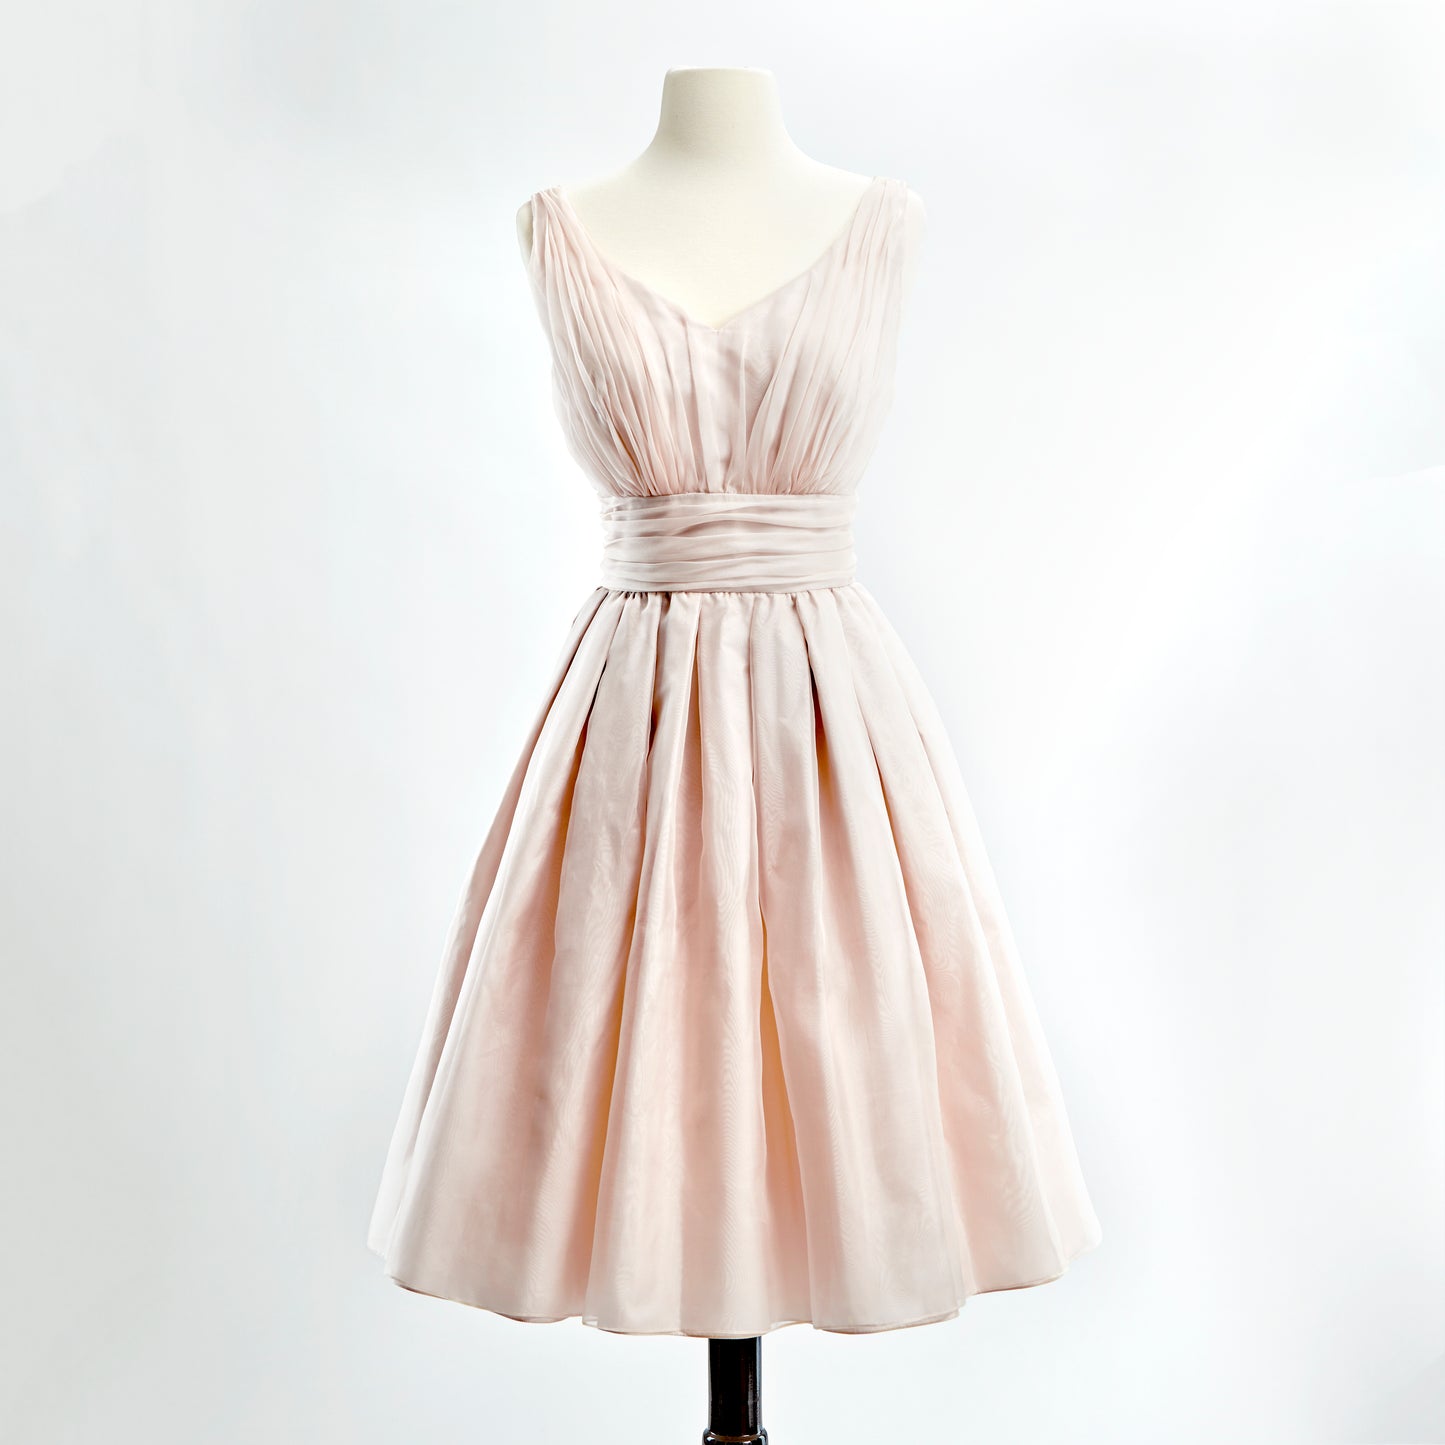 The Magnolia Dress